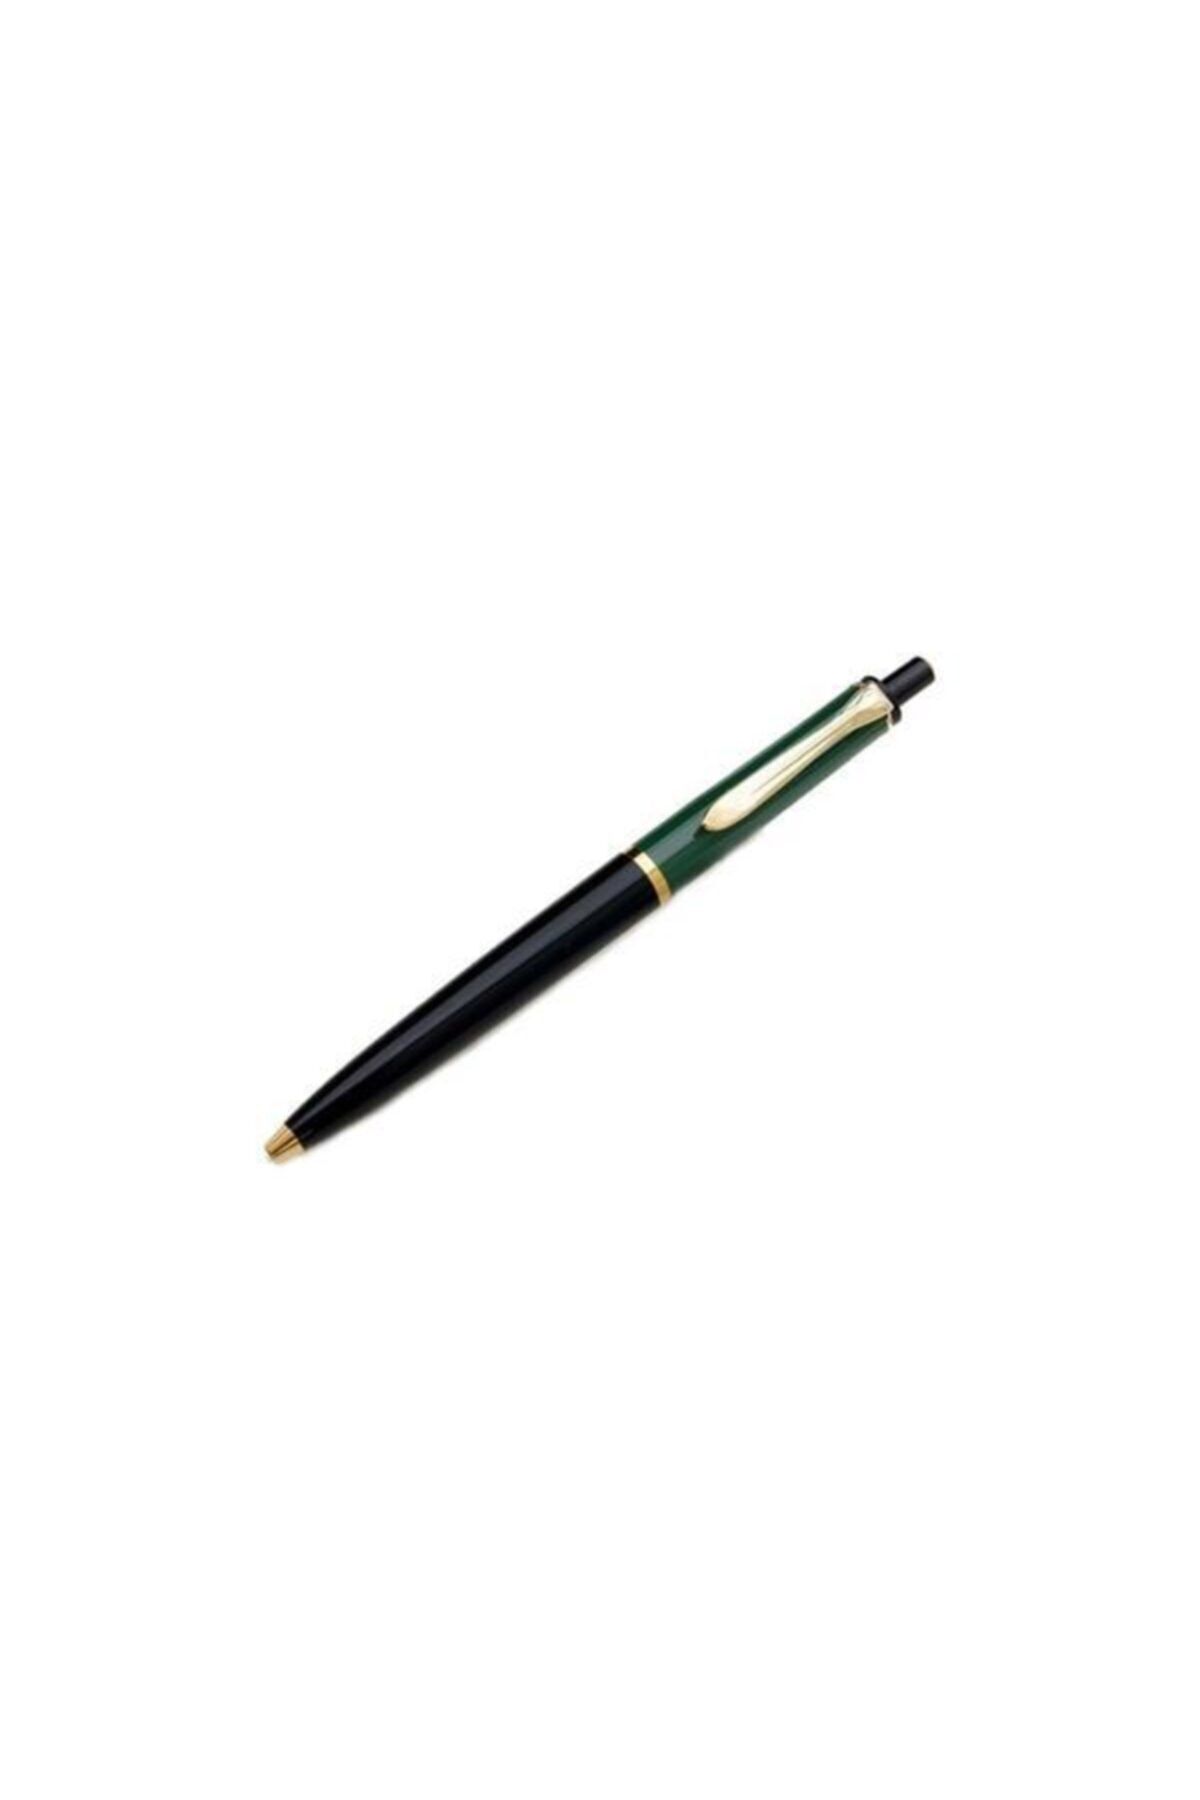 Pelikan K150 Tükenmez Kalem Yeşil-siyah Pel-k150y